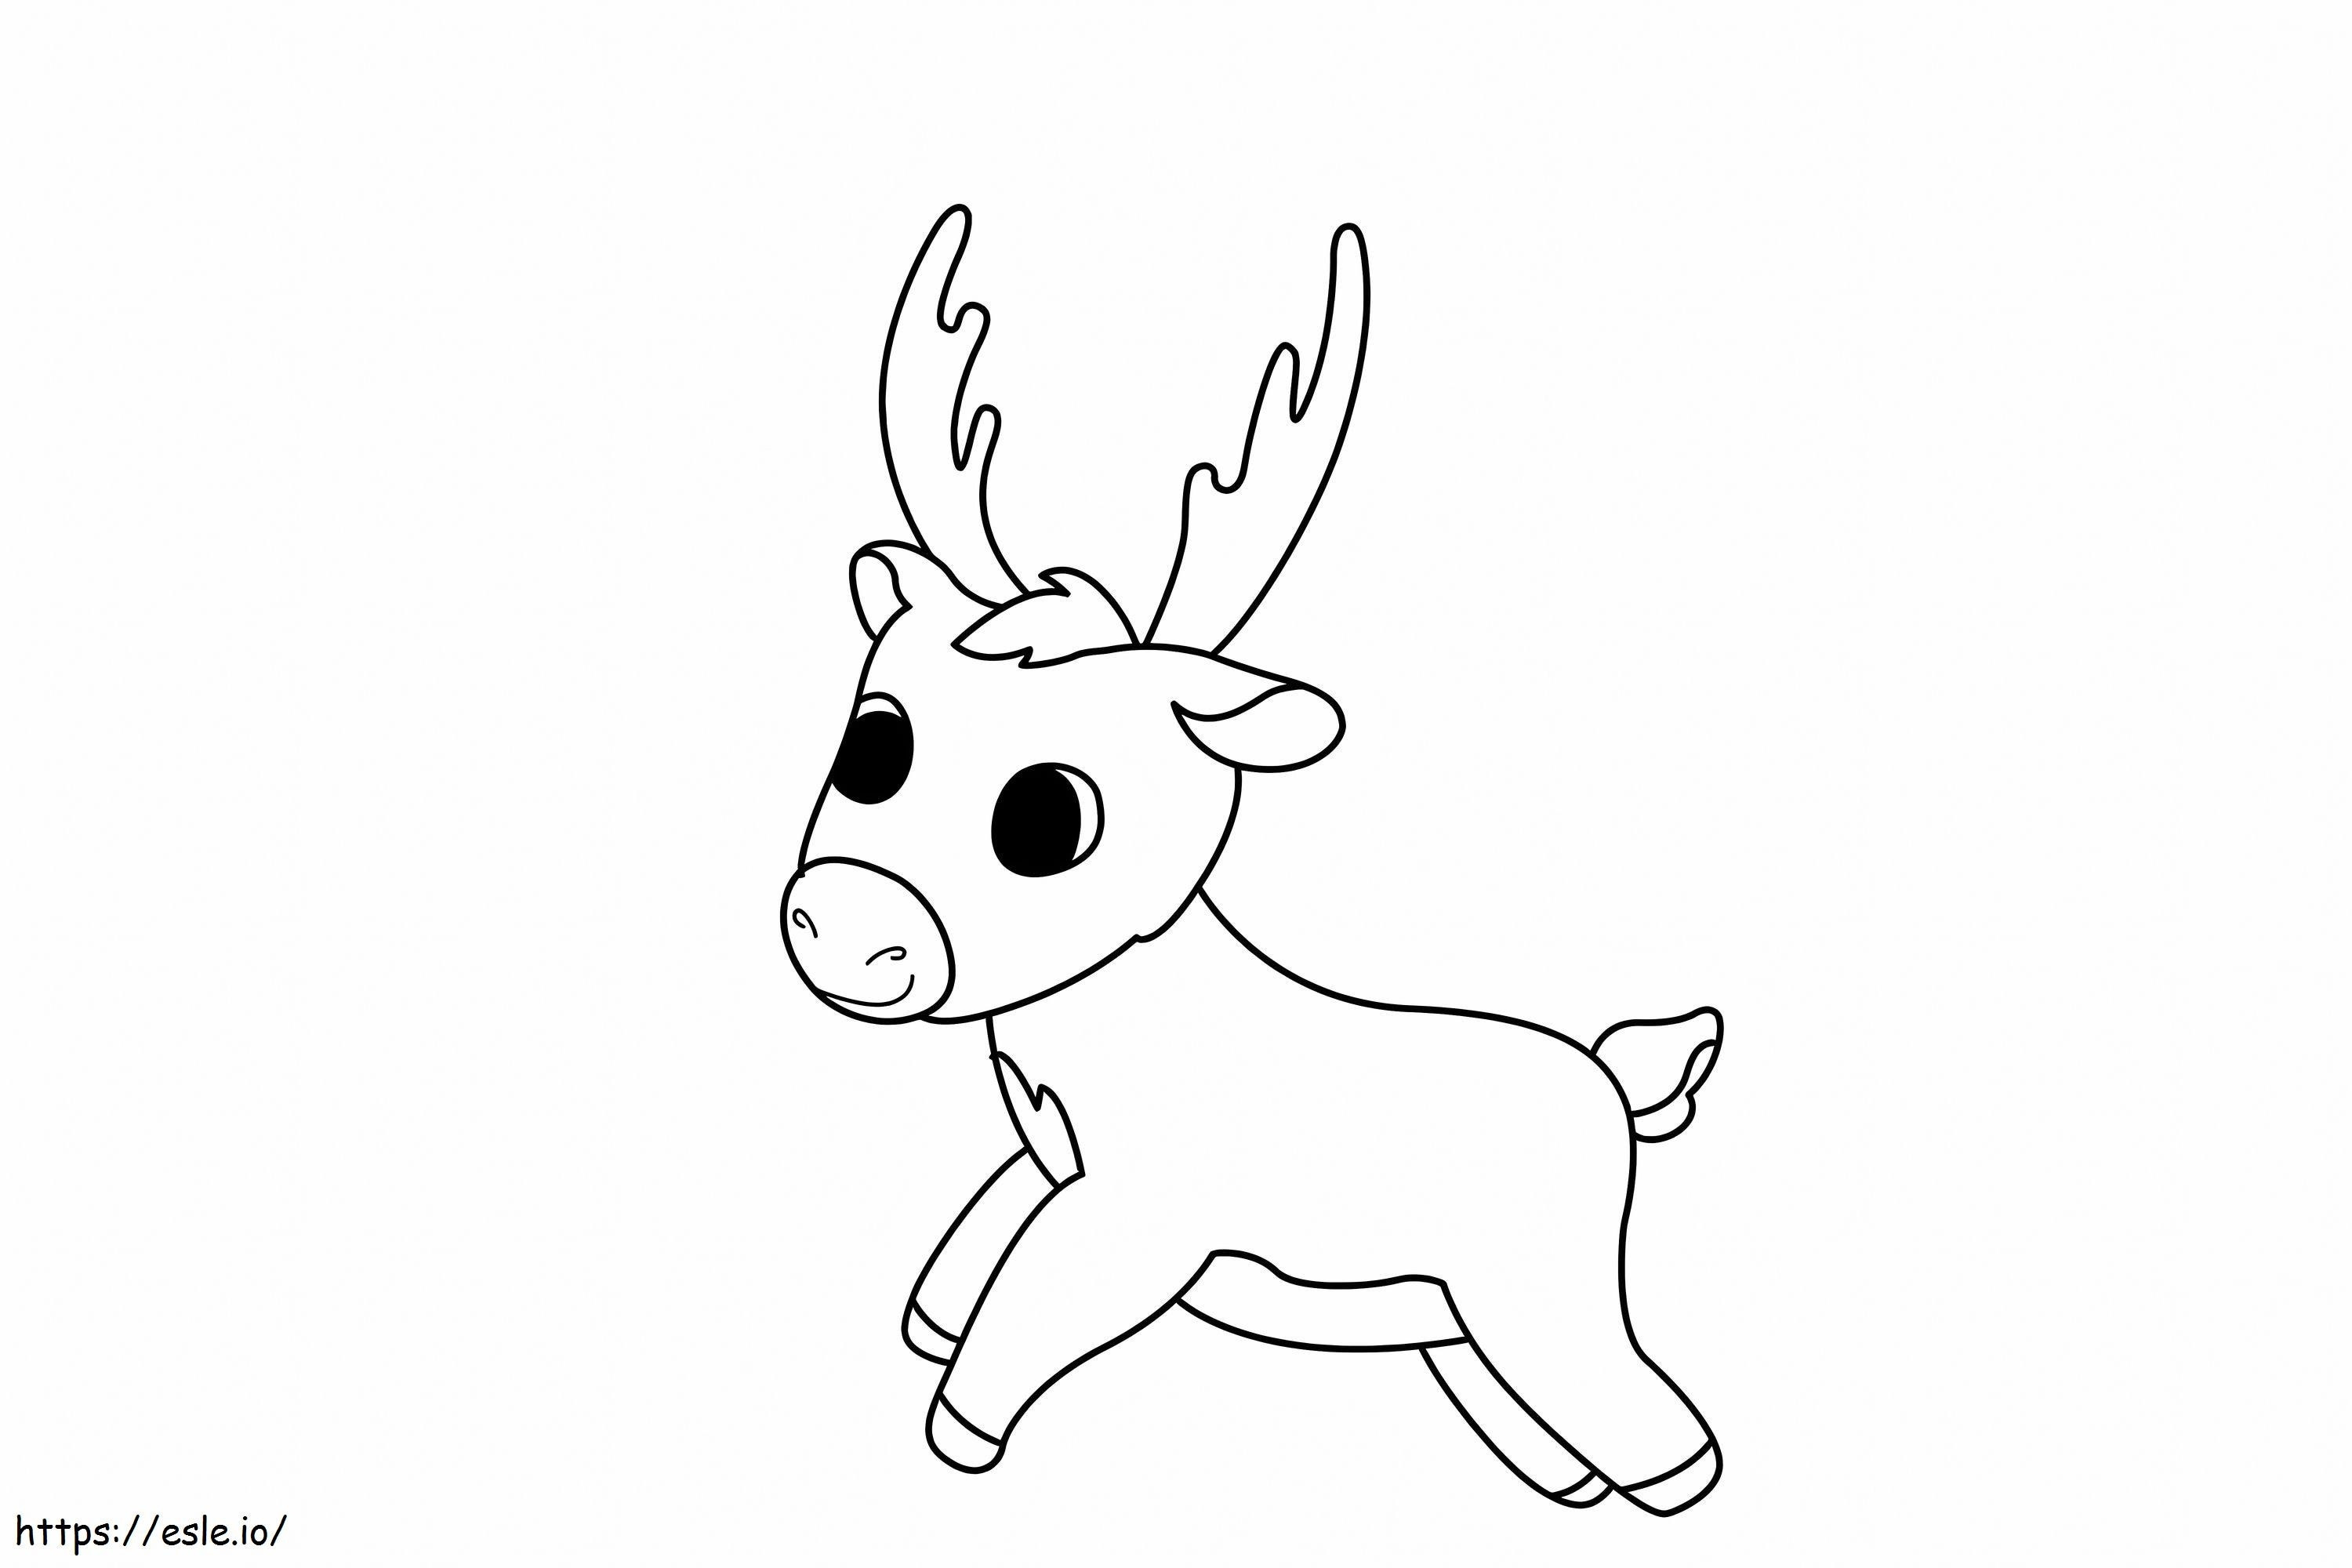 Baby Reindeer Running coloring page